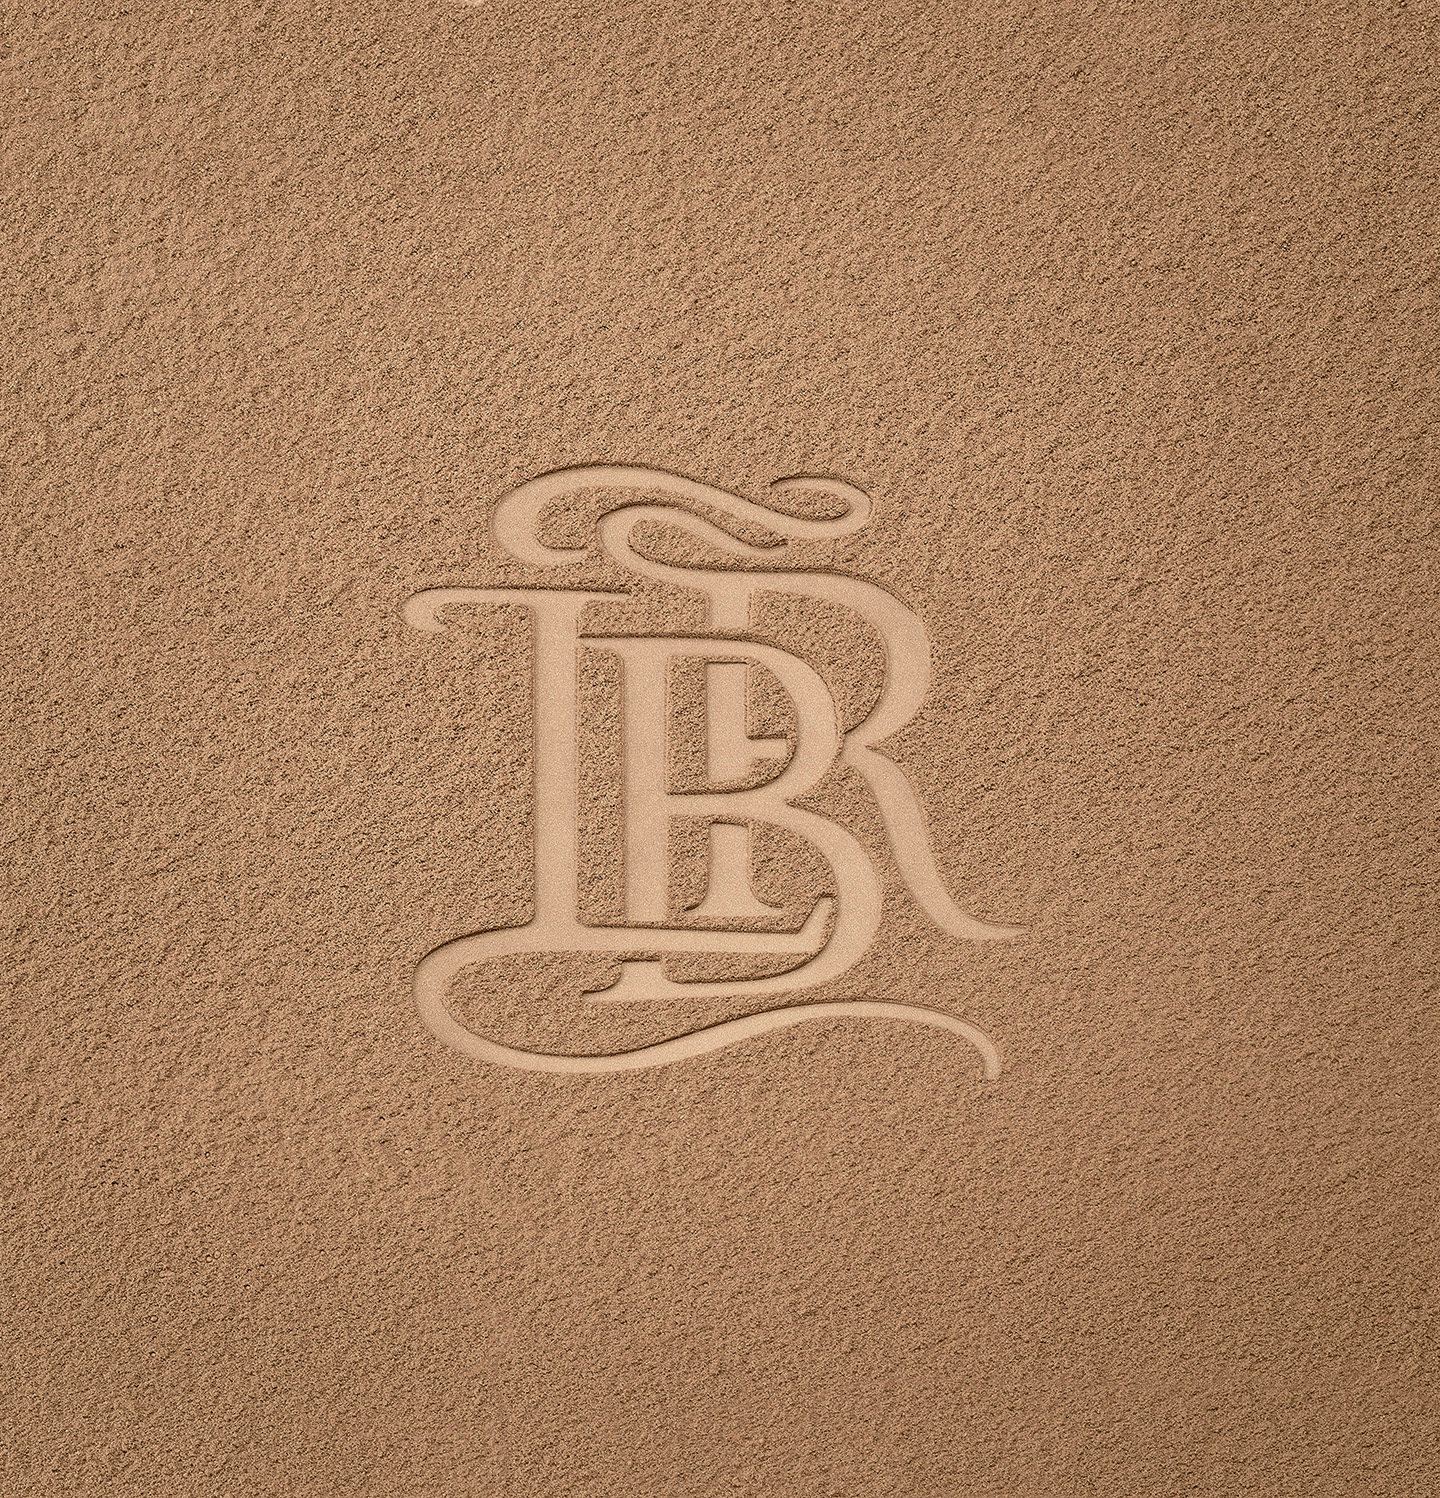 La bouche rouge La Terre Brune bronzer swatch with logo